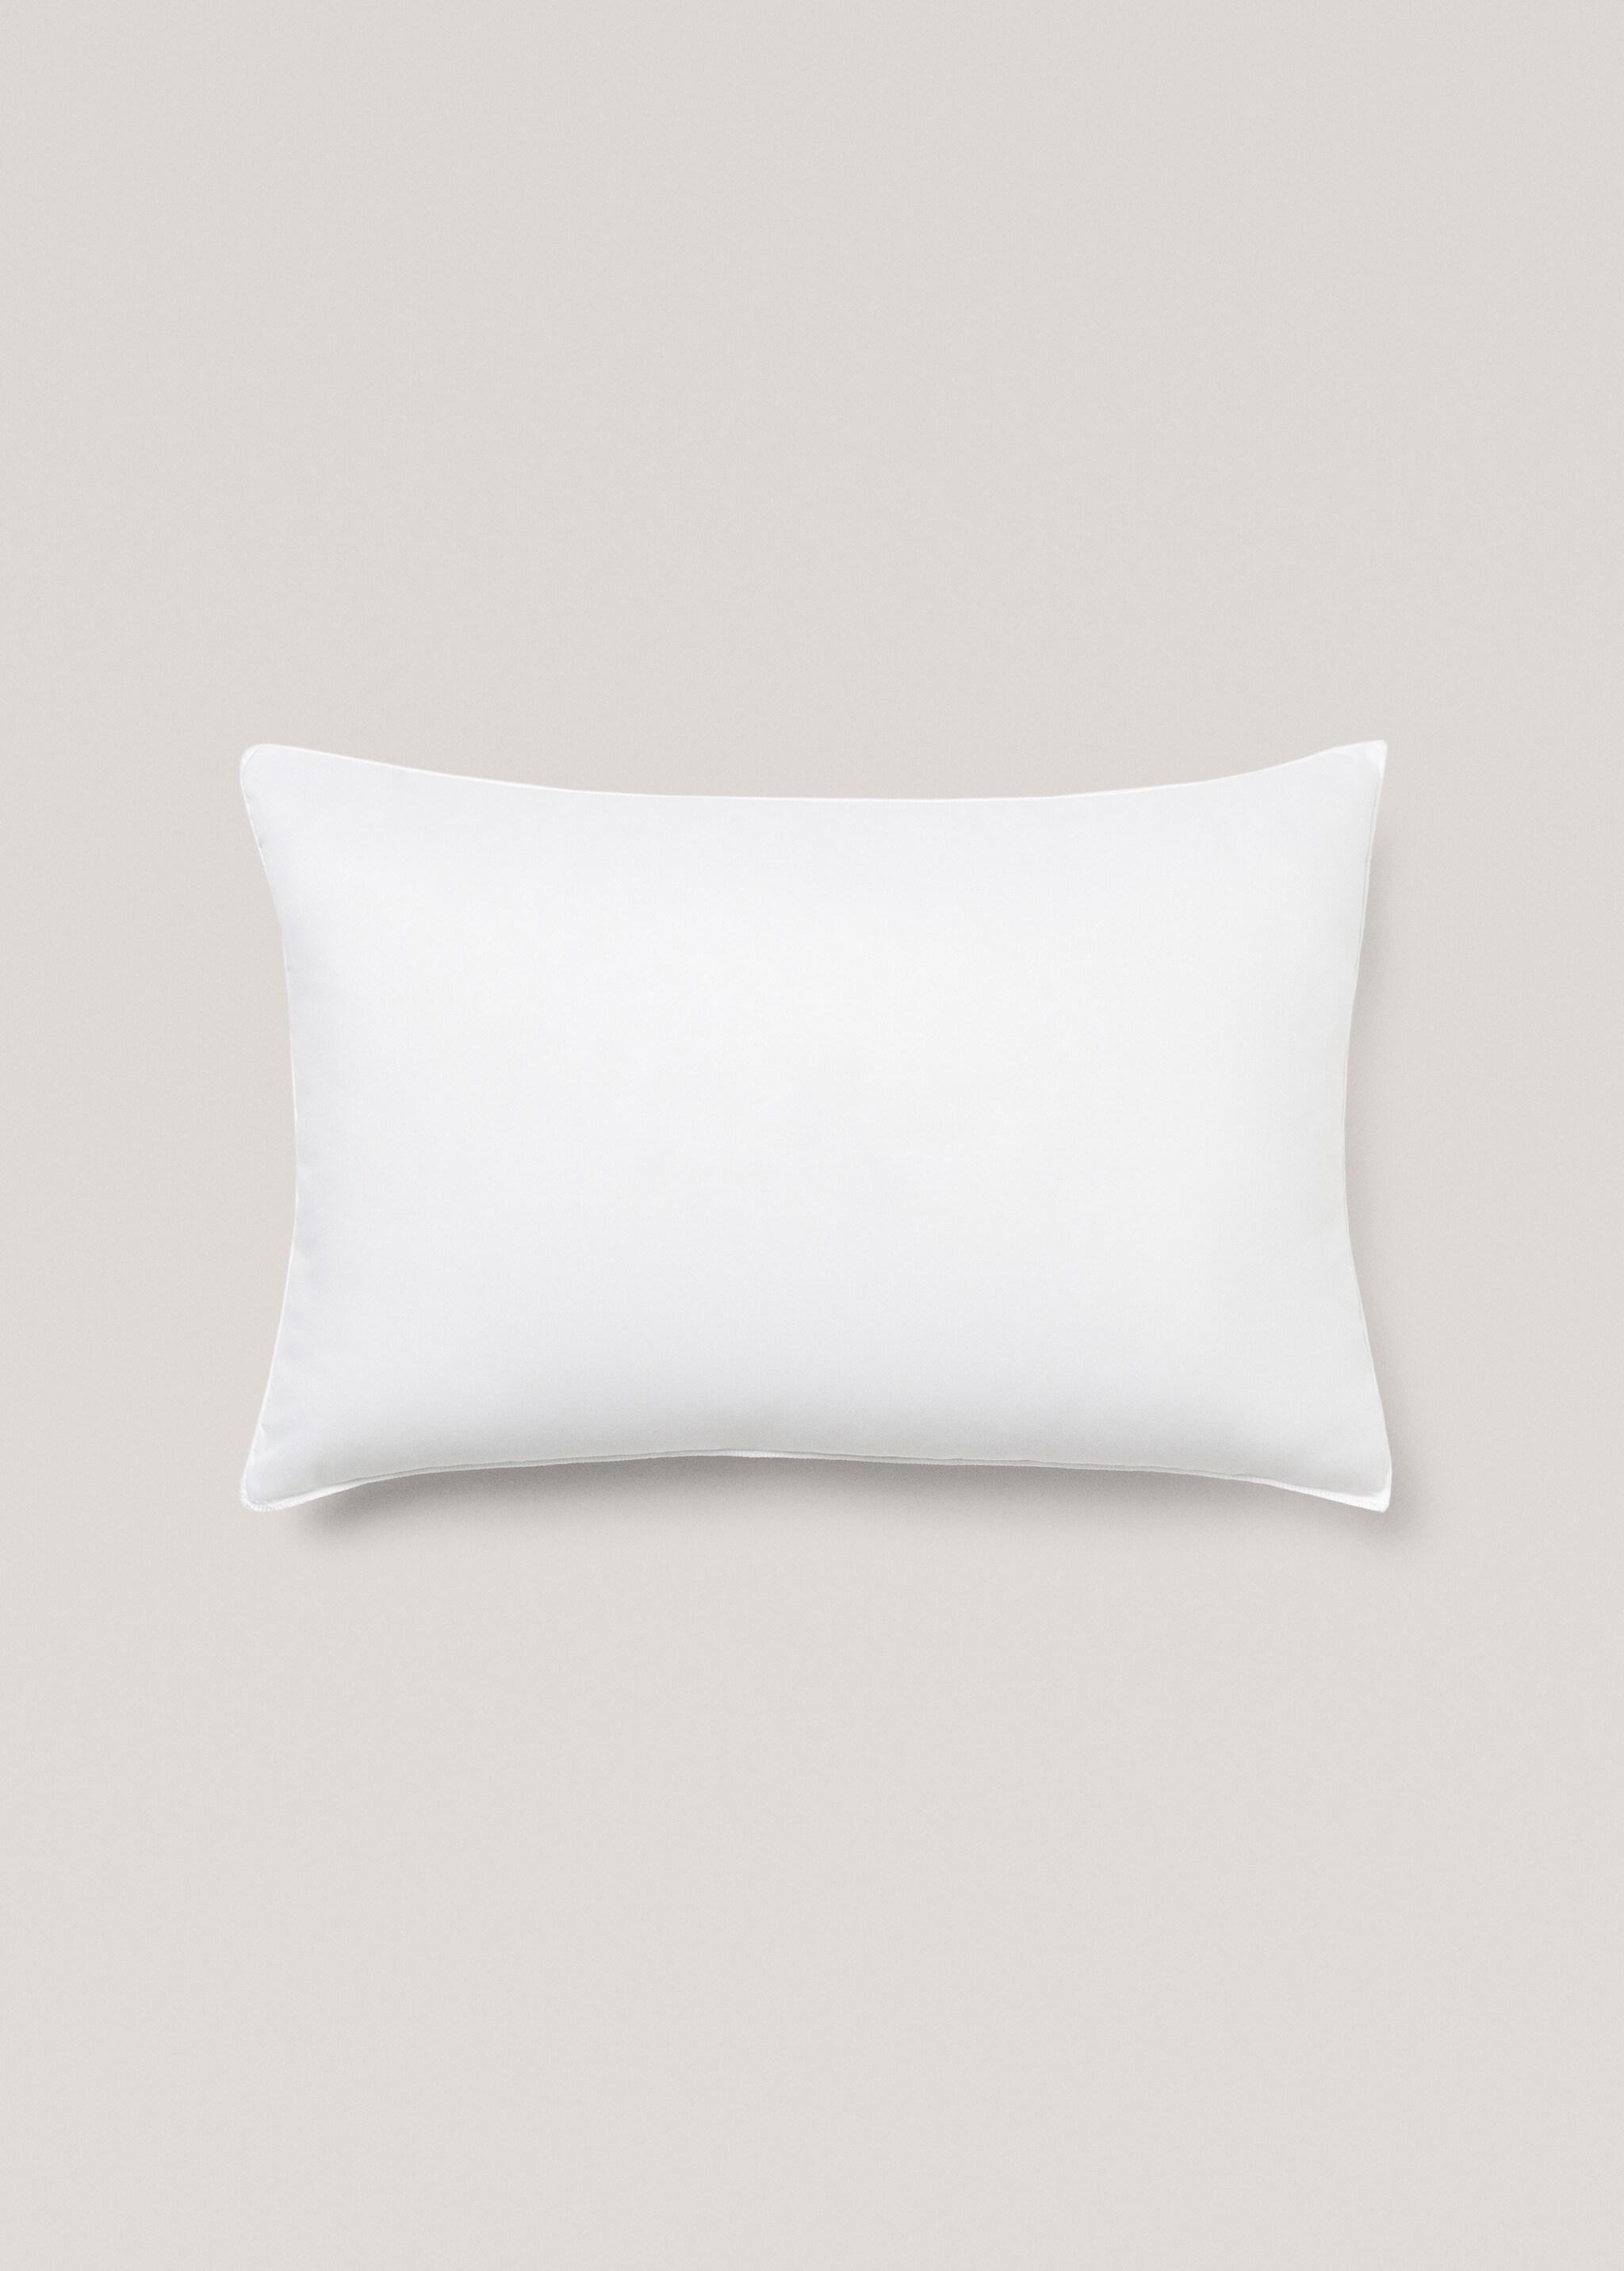 Fibre cushion padding 40x60cm - Article without model